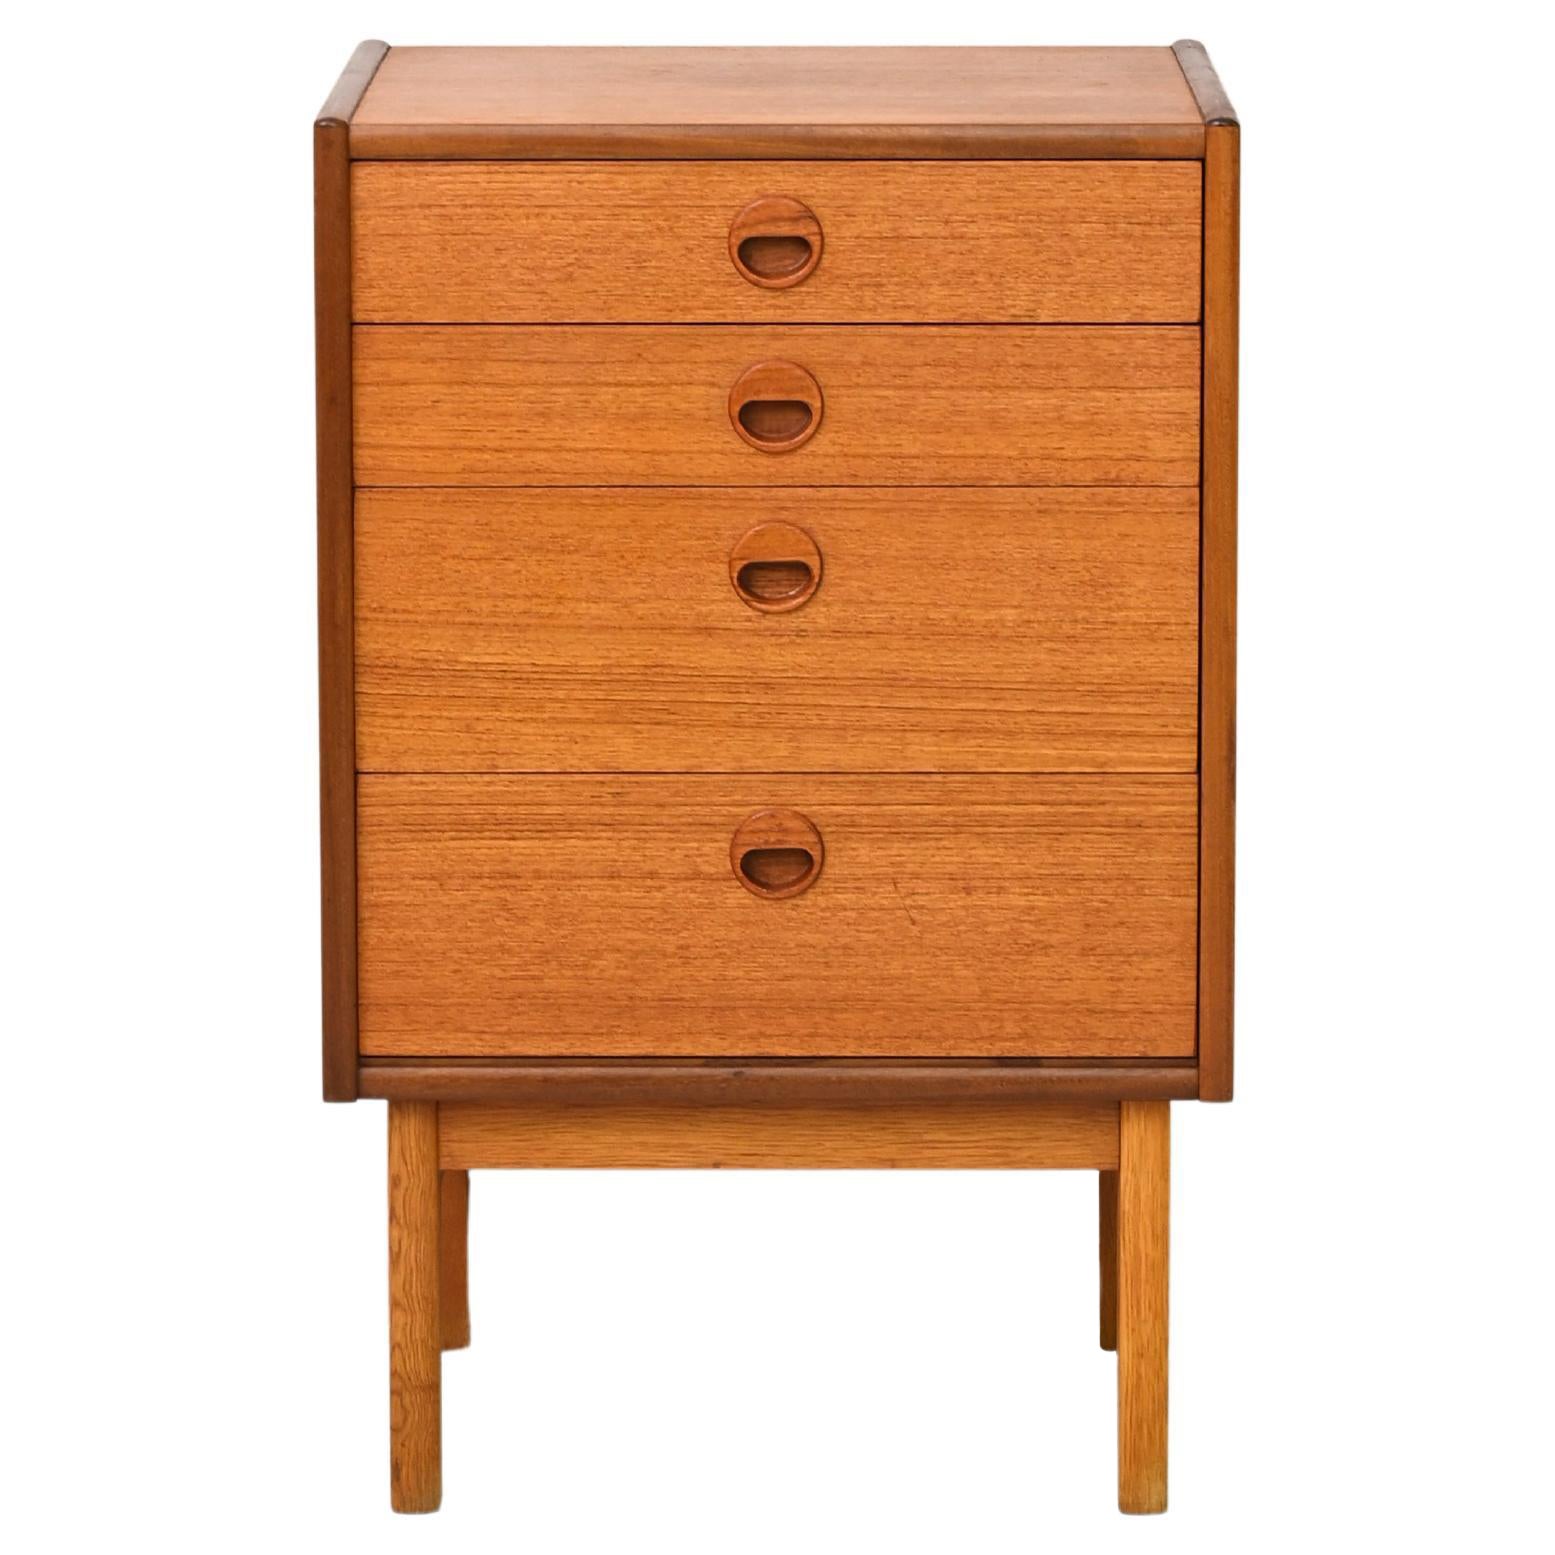 Vintage chest of drawers / Scandinavian nightstand